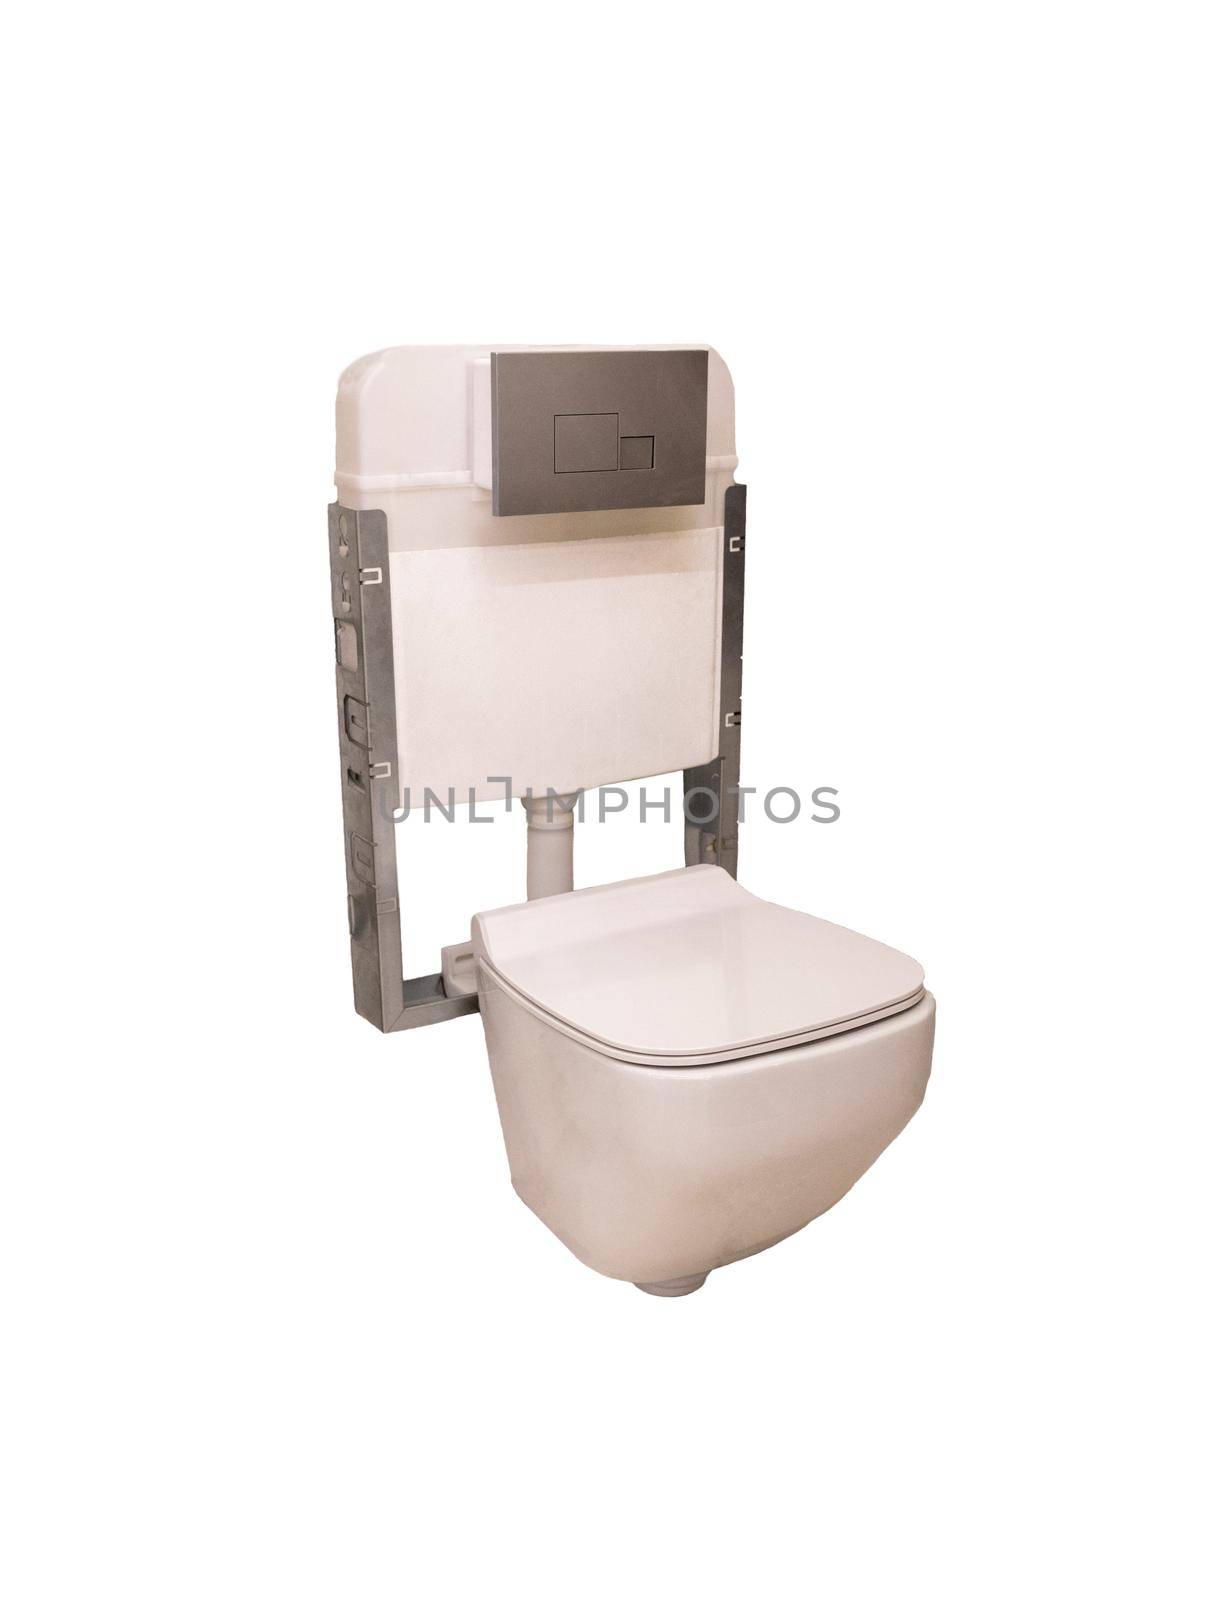 New clean white ceramic toilet bowl with white background